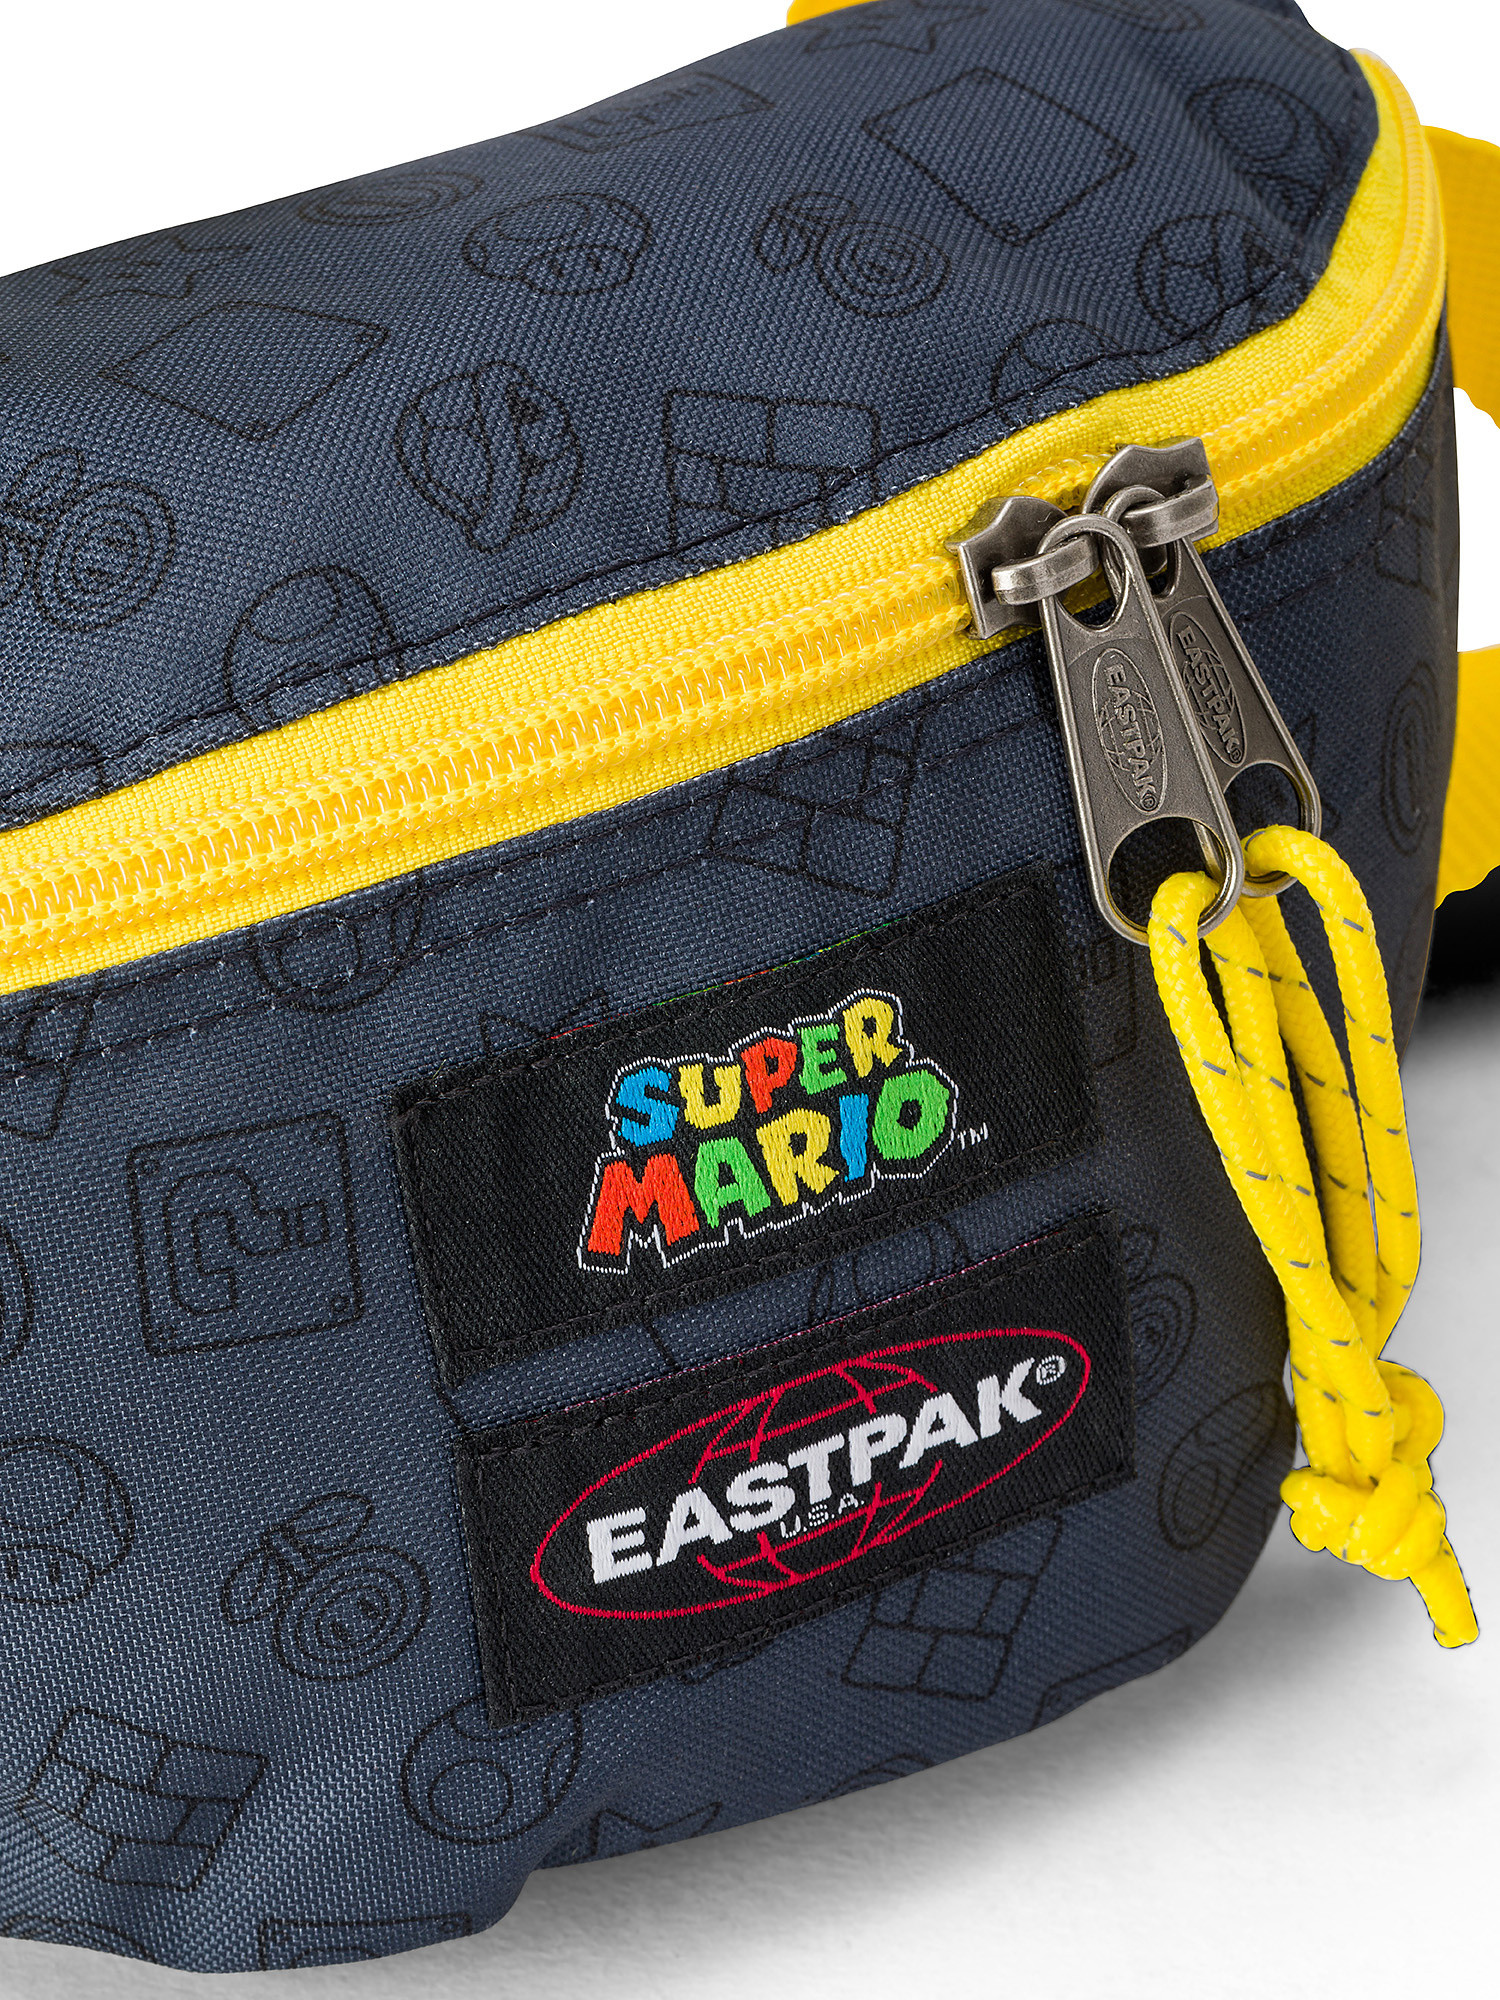 Eastpak - Springer Mario Gray bum bag, Dark Grey, large image number 2